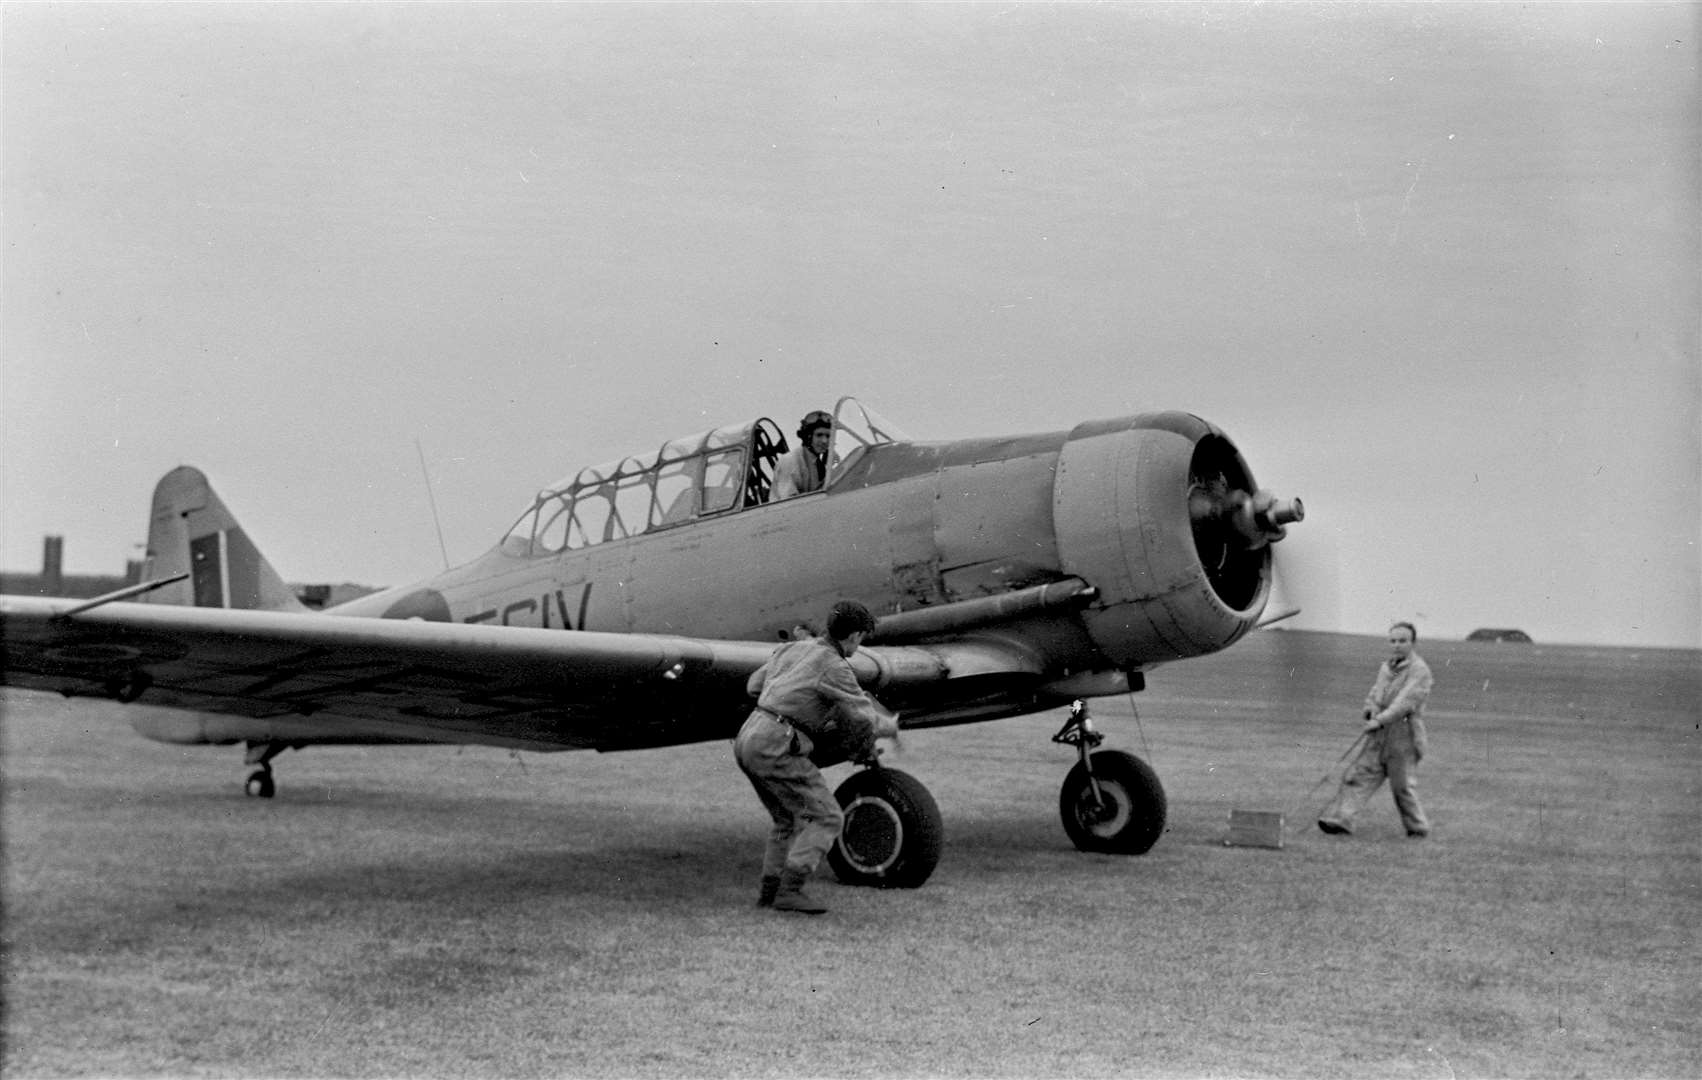 Aircrew preparing a fighter plane